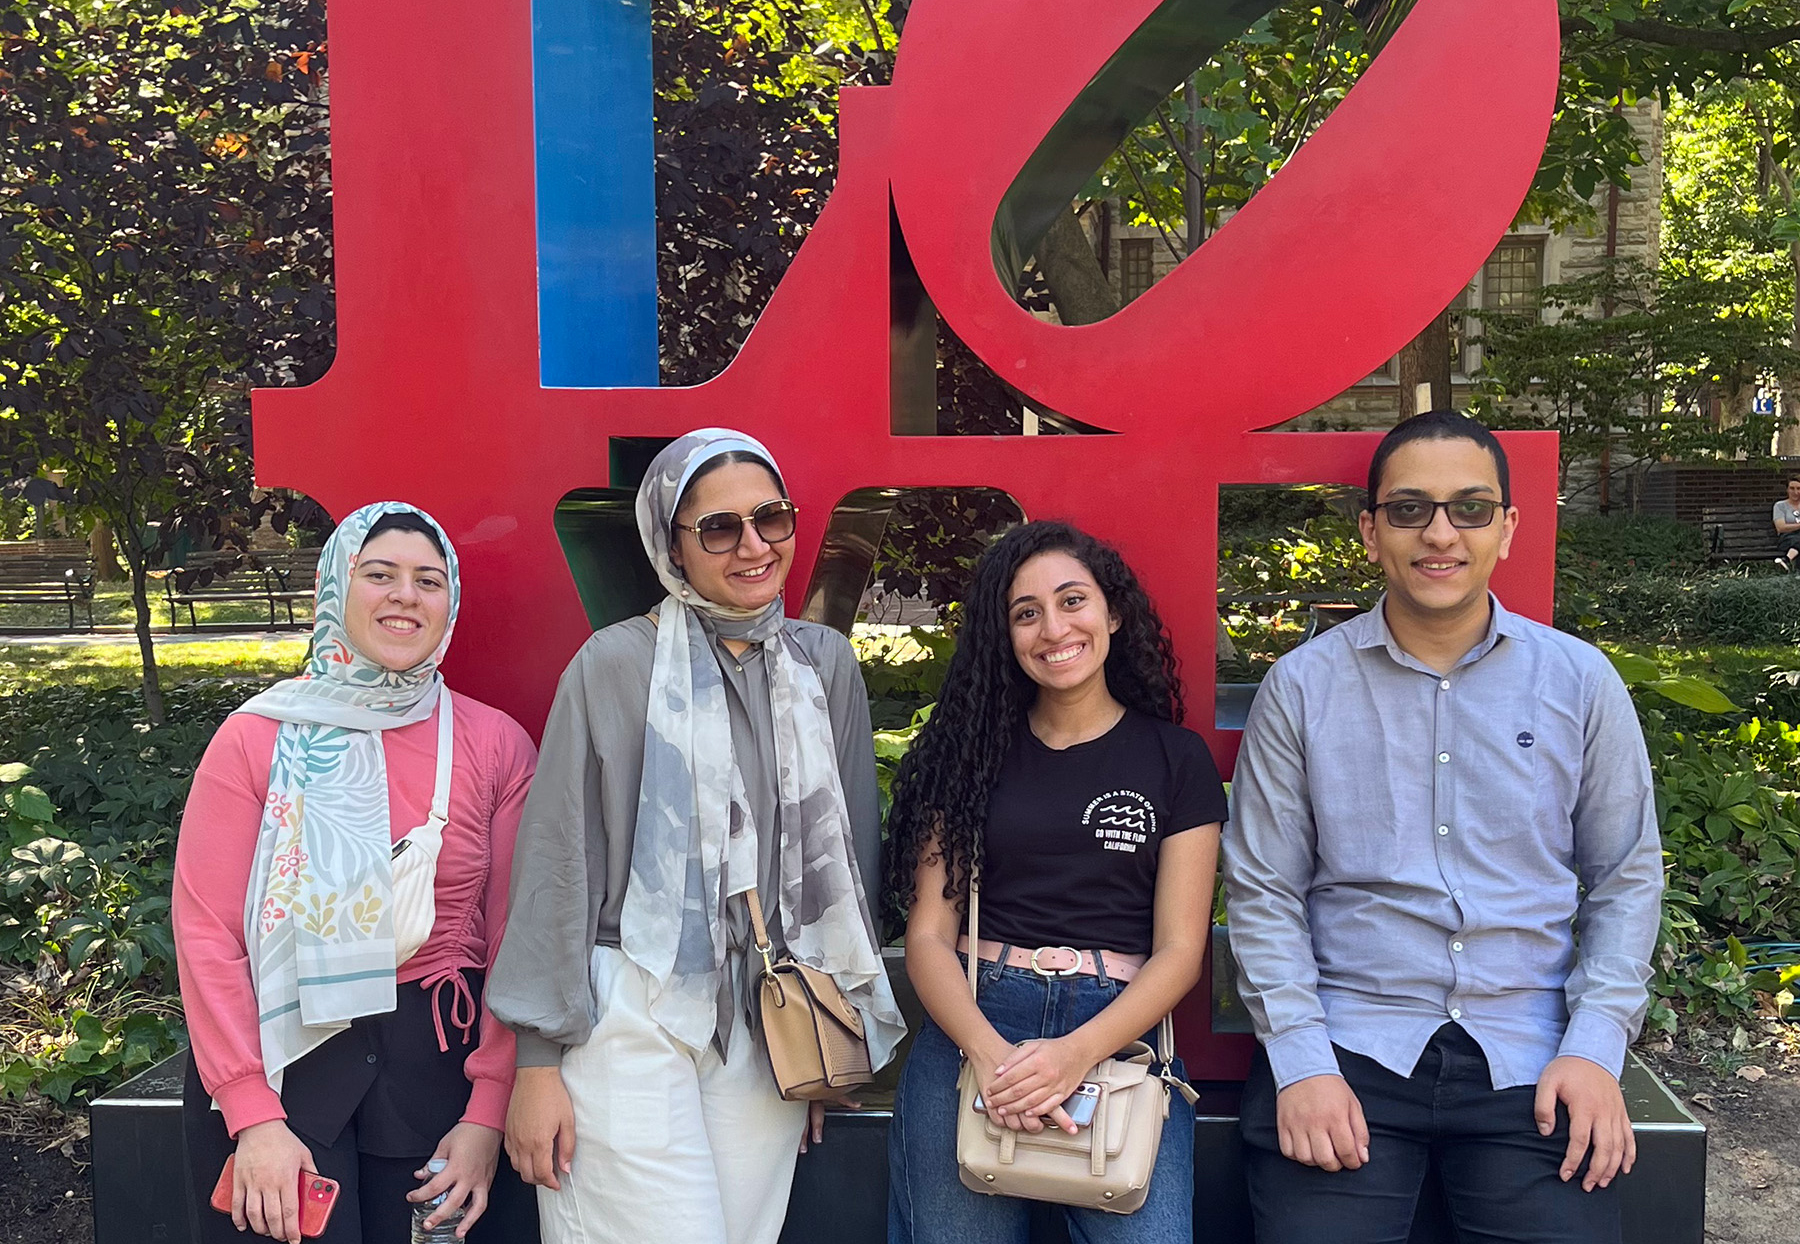 Farah Essam Girat-Allah, Rawan Sleem, Carine Mankarious, and George Habib in front of Penn’s LOVE statue on College Green.